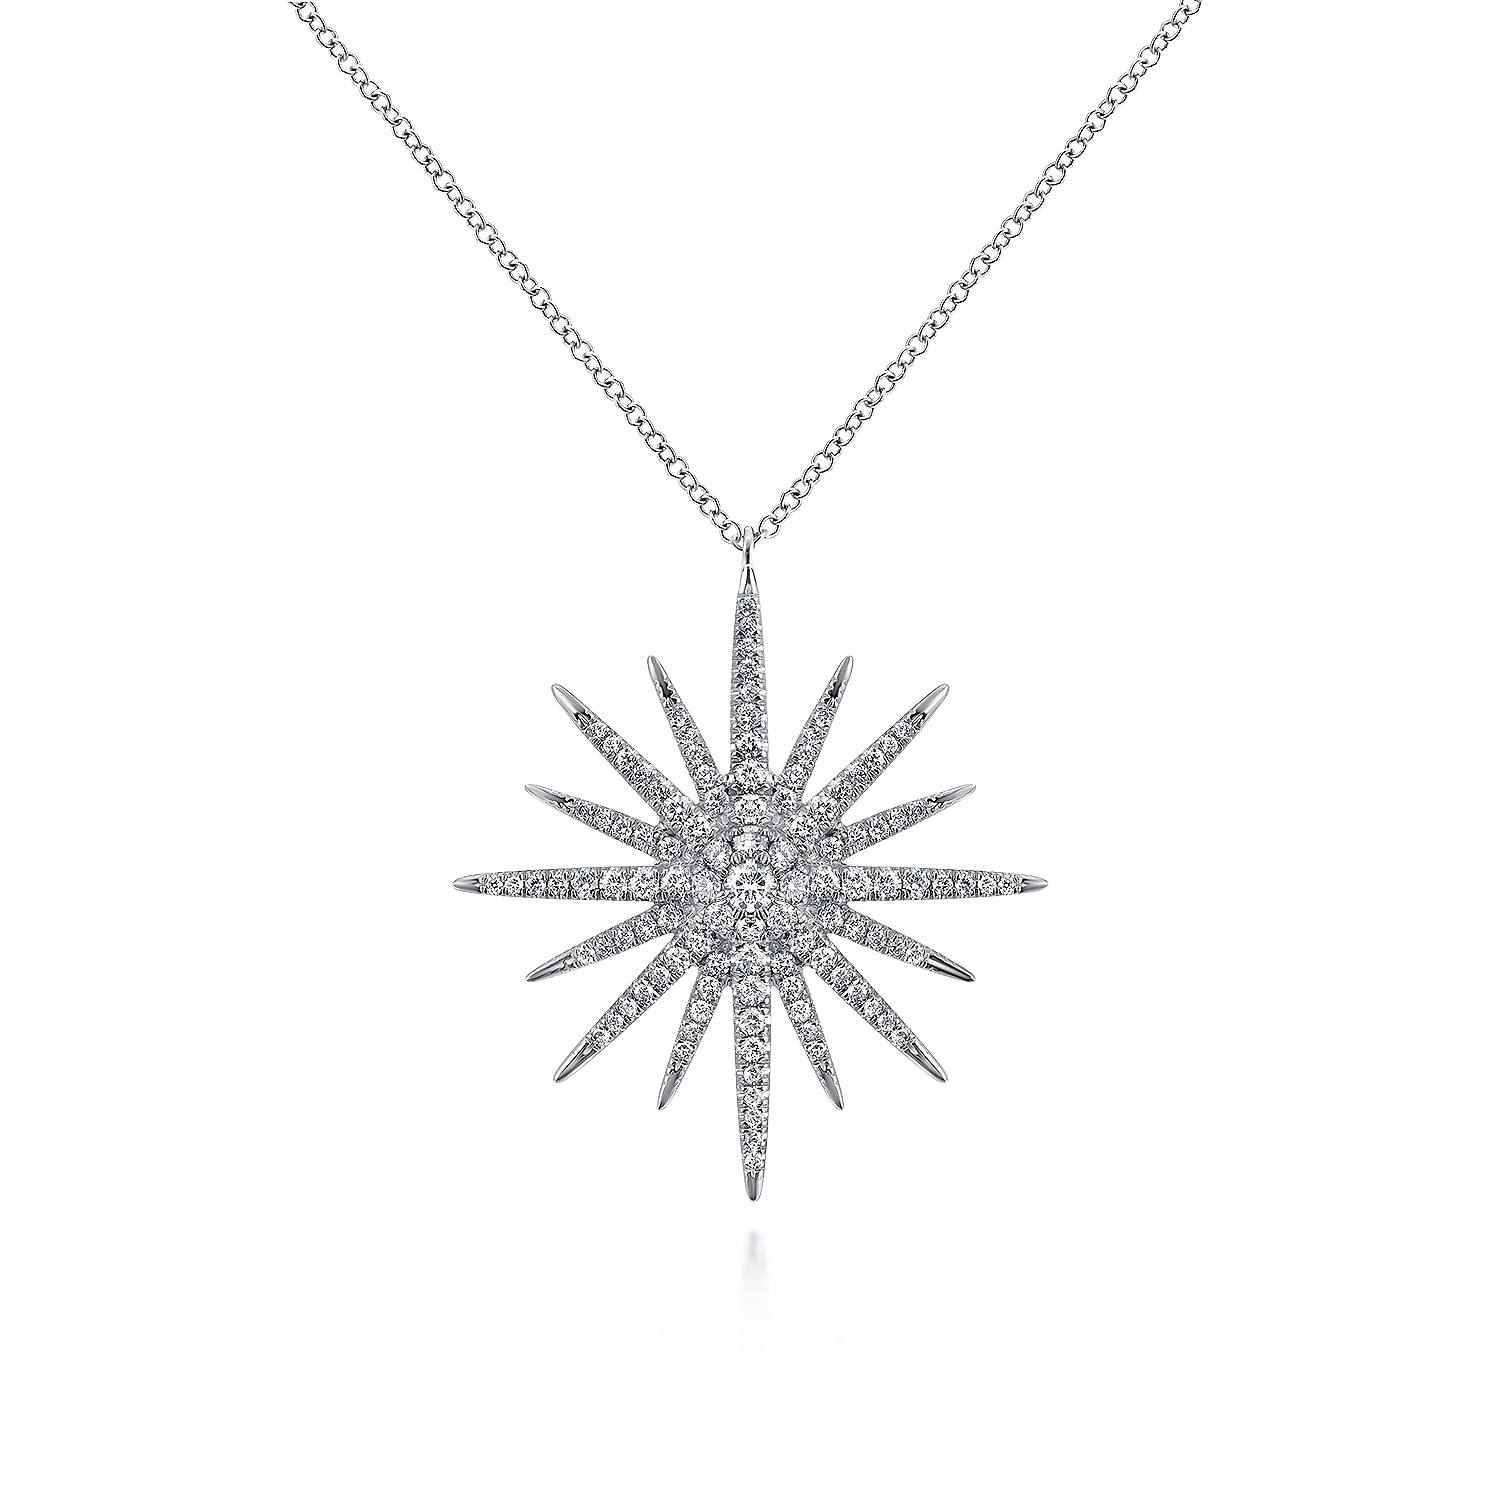 25 inch 14K White Gold Diamond Pavé Starburst Pendant Necklace